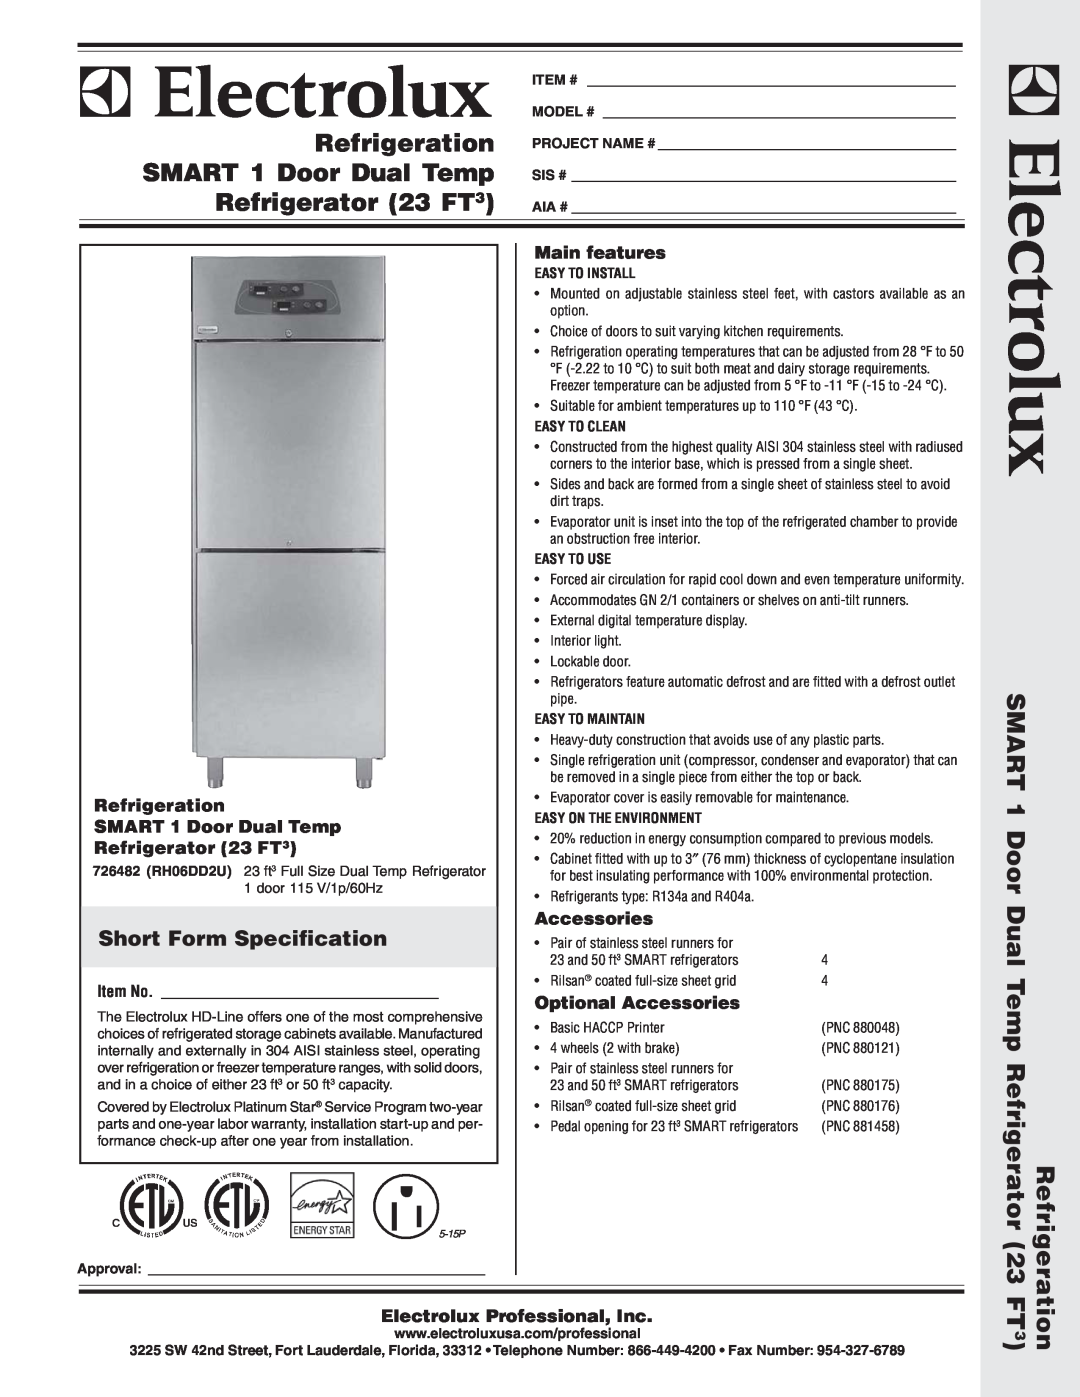 Electrolux RH06DD2U, 726482 warranty Short Form Specification, Refrigeration SMART 1 Door Dual Temp Refrigerator 23 FT3 